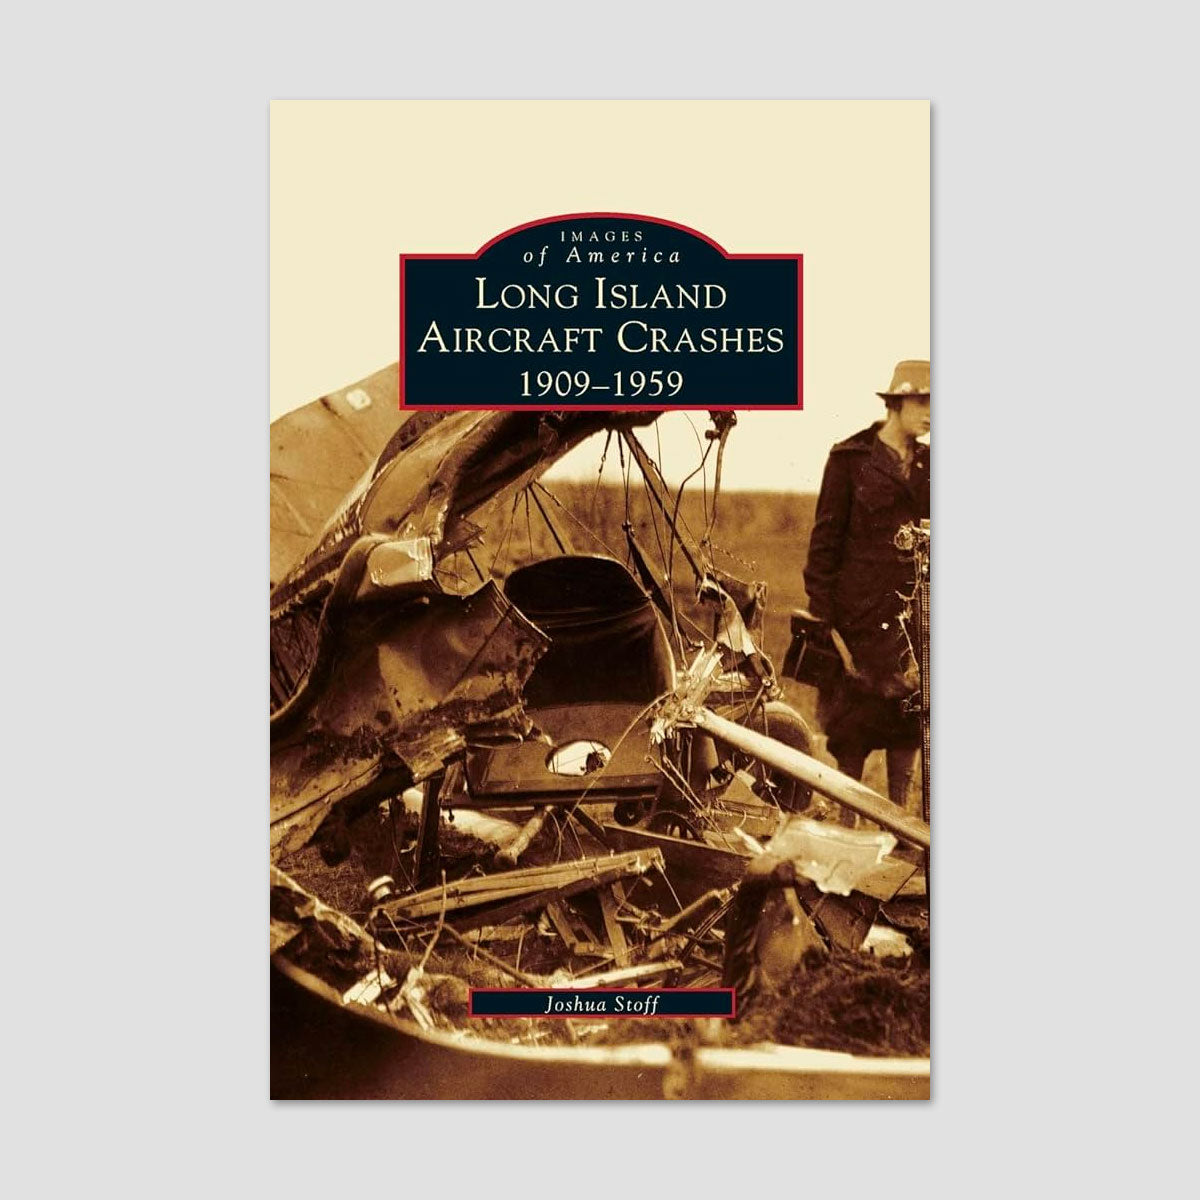 SIGNED Copy! Long Island Aircraft Crashes 1909-1959